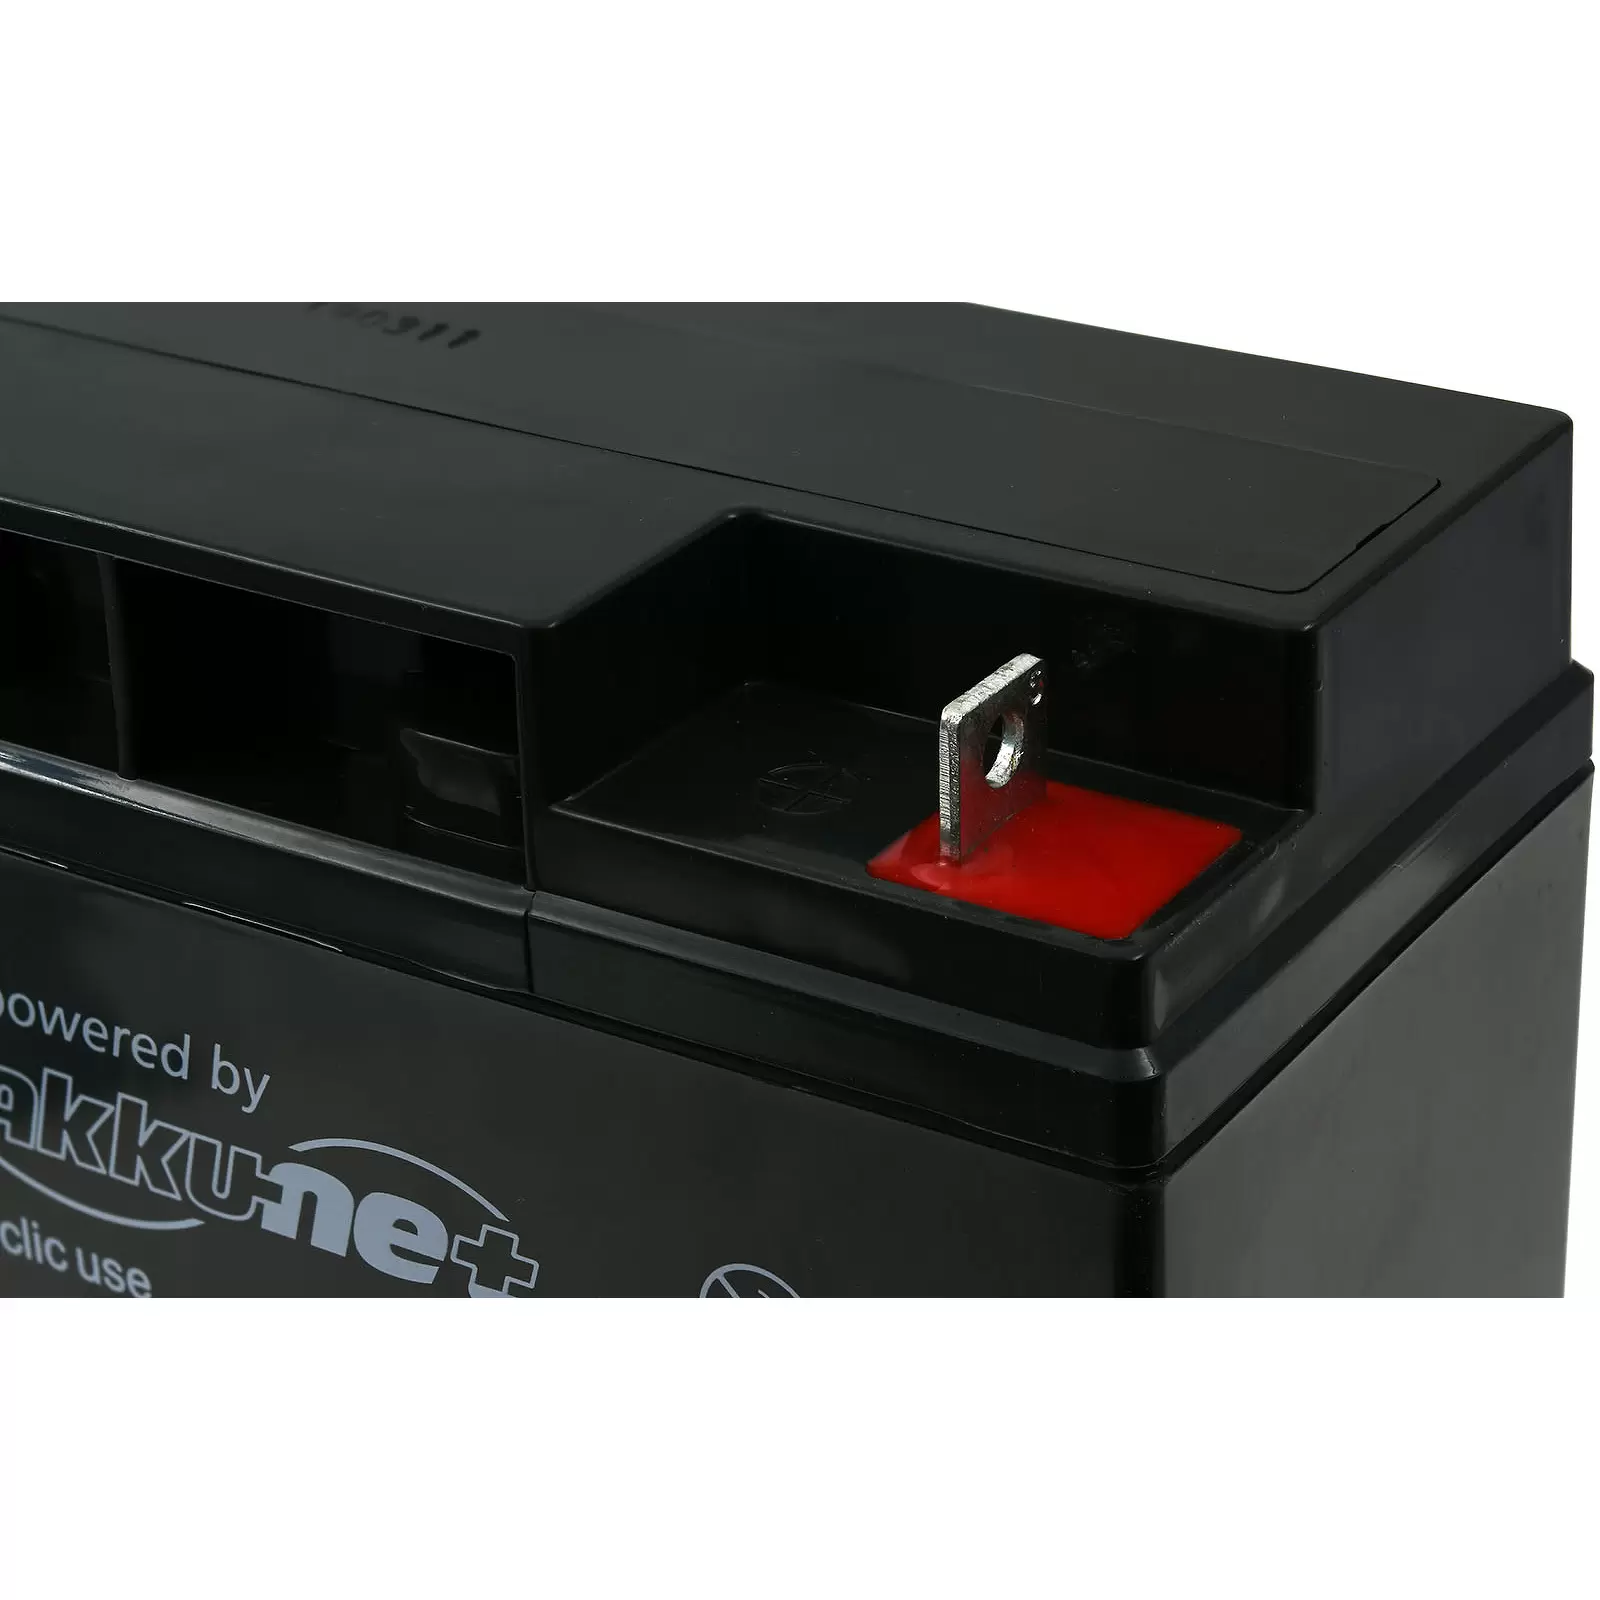 Powery Blei-Gel-Akku für USV APC Smart-UPS 1500